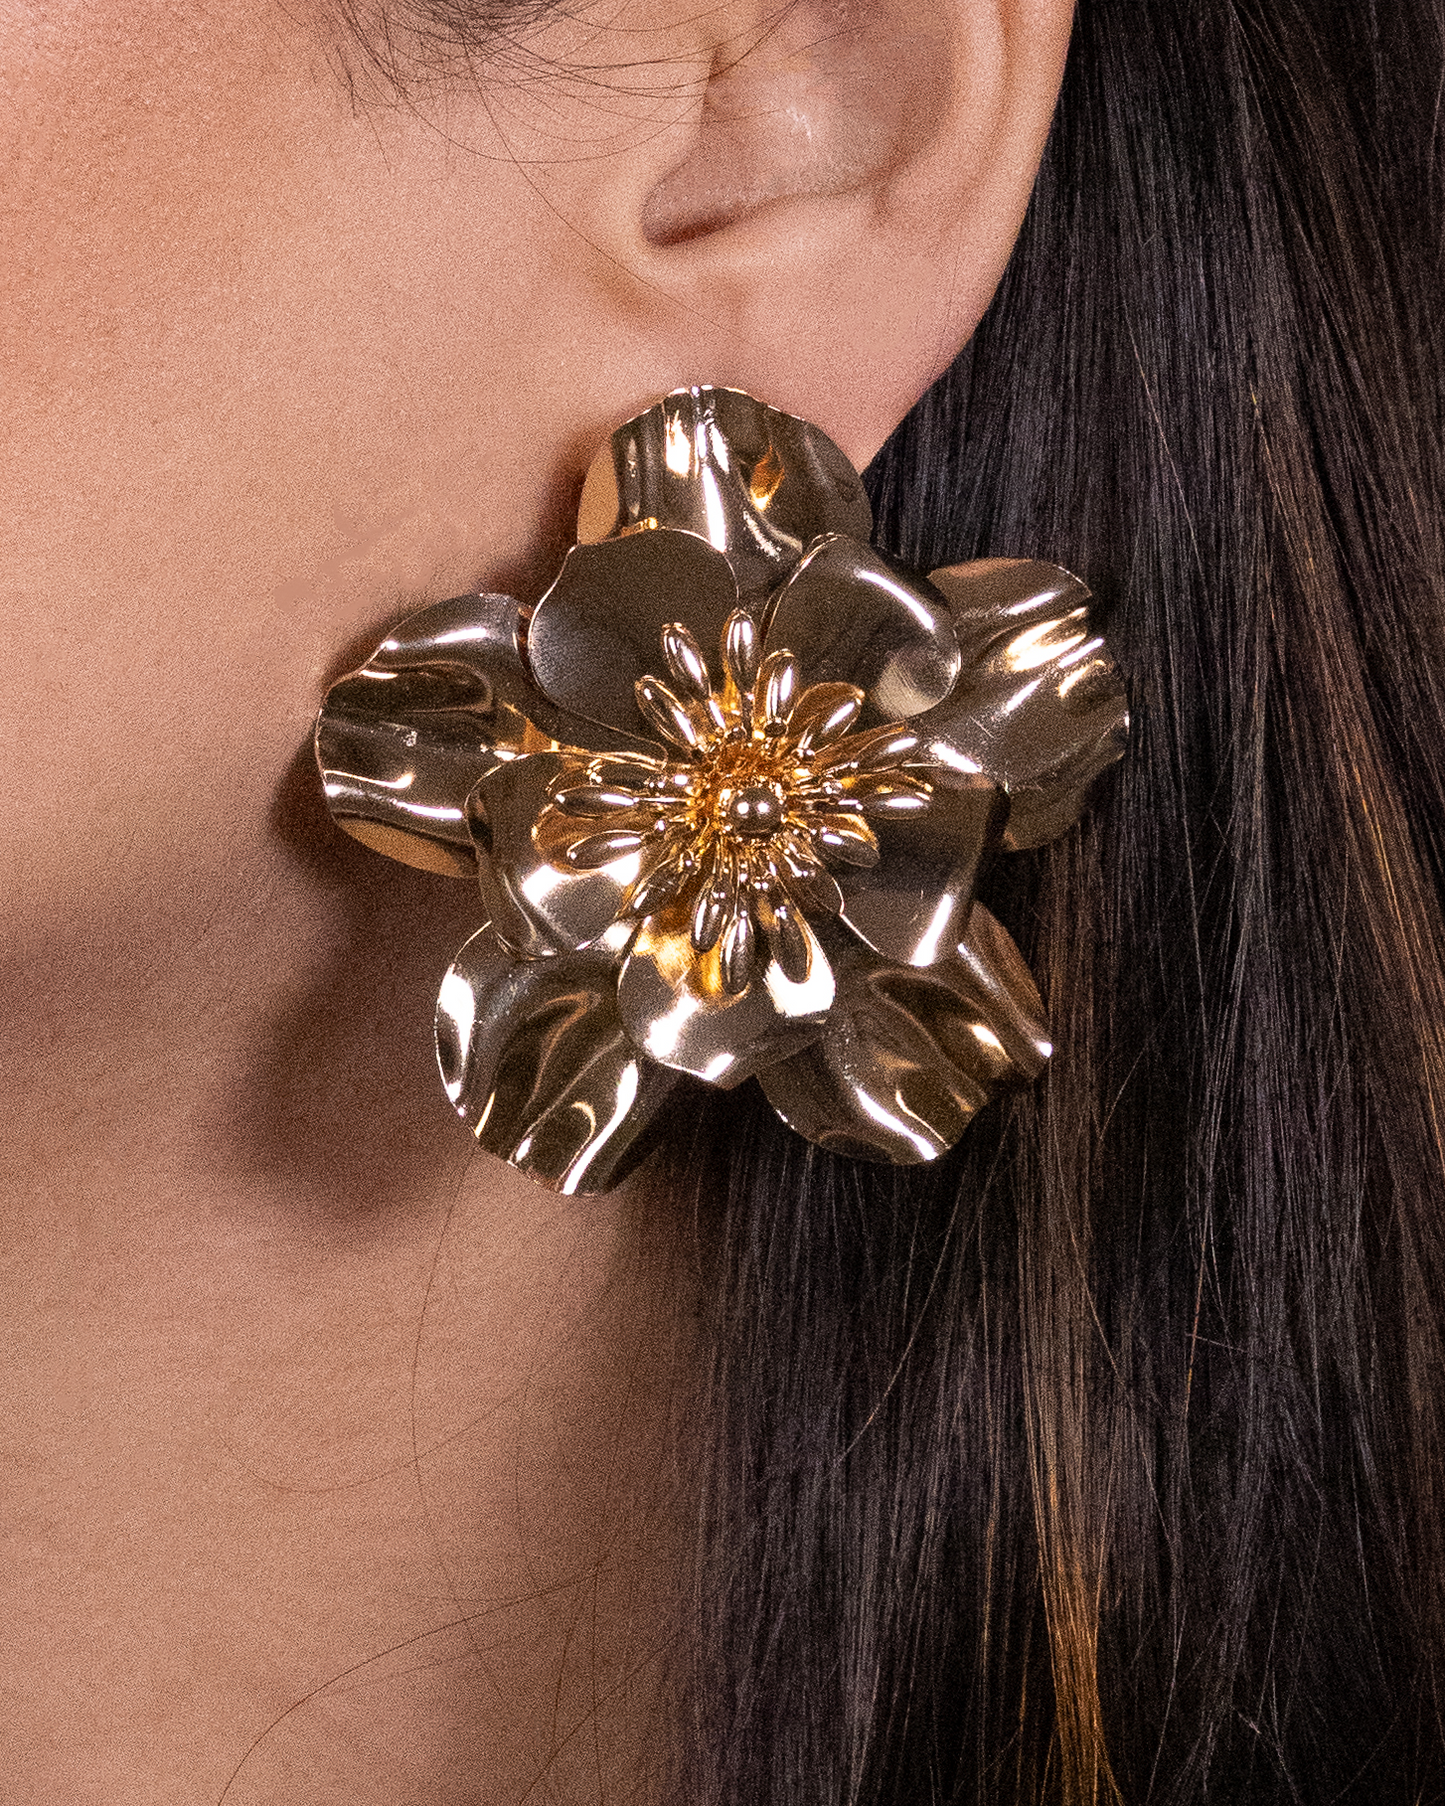 Big gold flower earrings